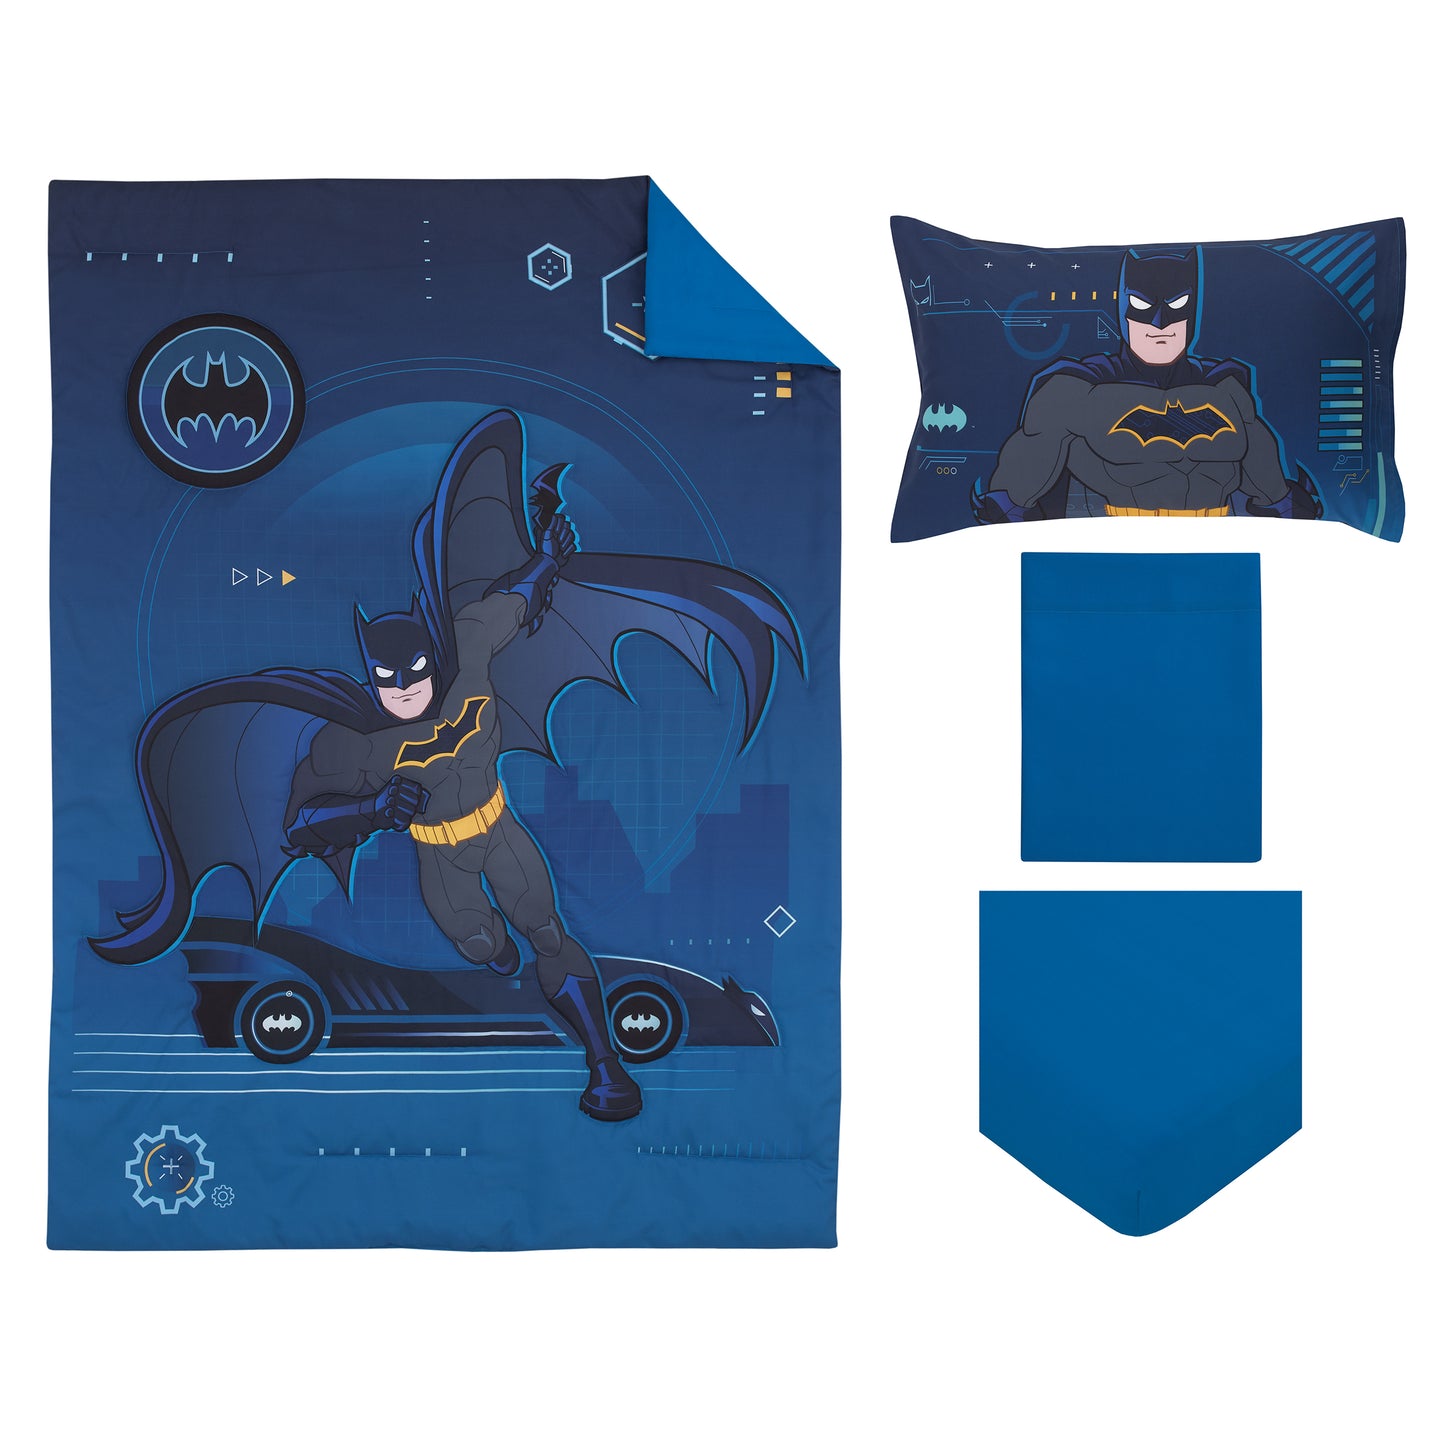 Warner Brothers Batman Bat-Tech Navy, Teal, Royal Blue, and Black 4 Piece Toddler Bed Set - Comforter, Fitted Bottom Sheet, Flat Top Sheet, and Reversible Pillowcase